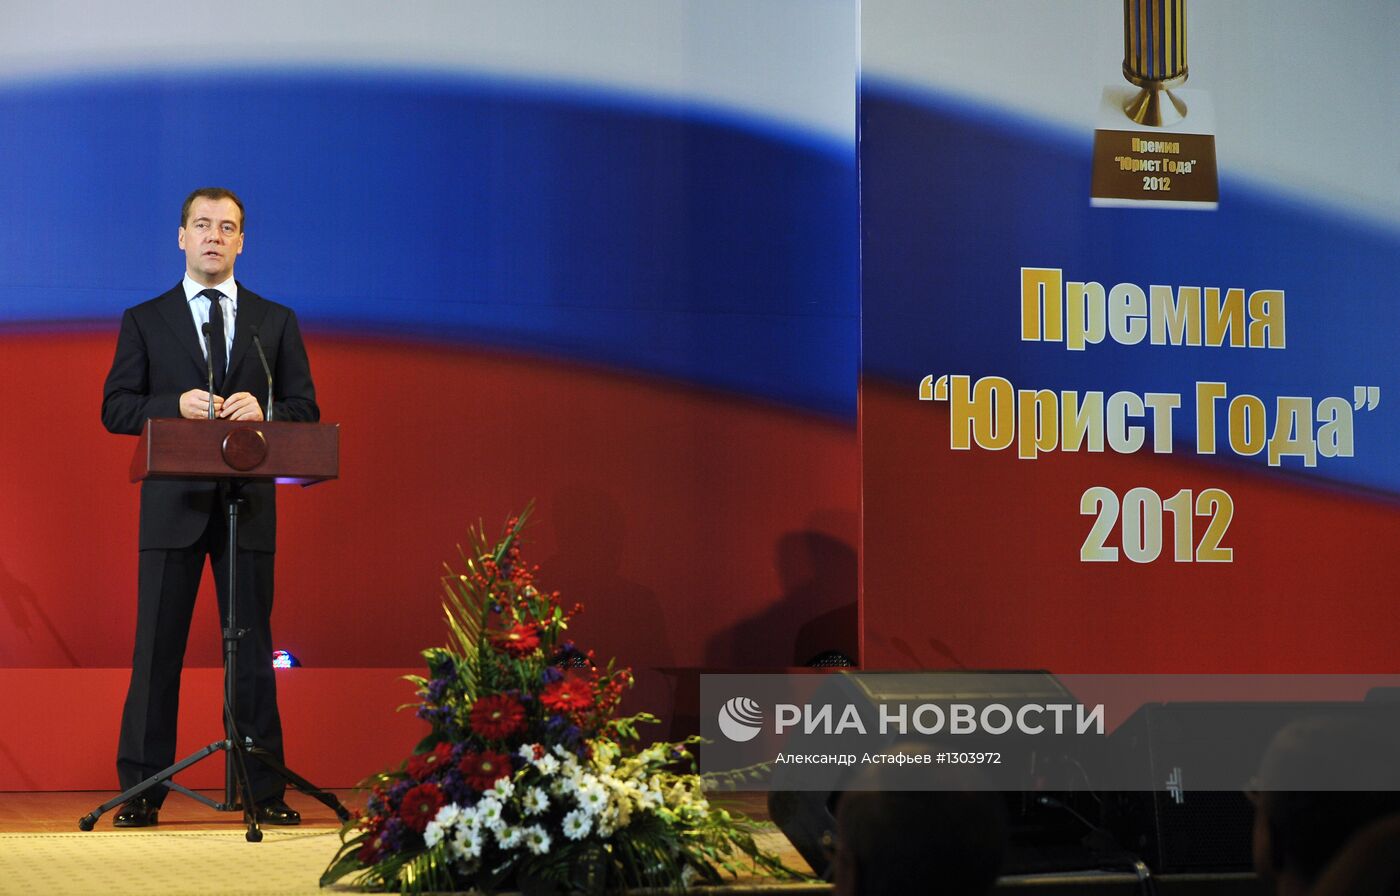 Д.Медведев на церемонии вручения премии "Юрист года"